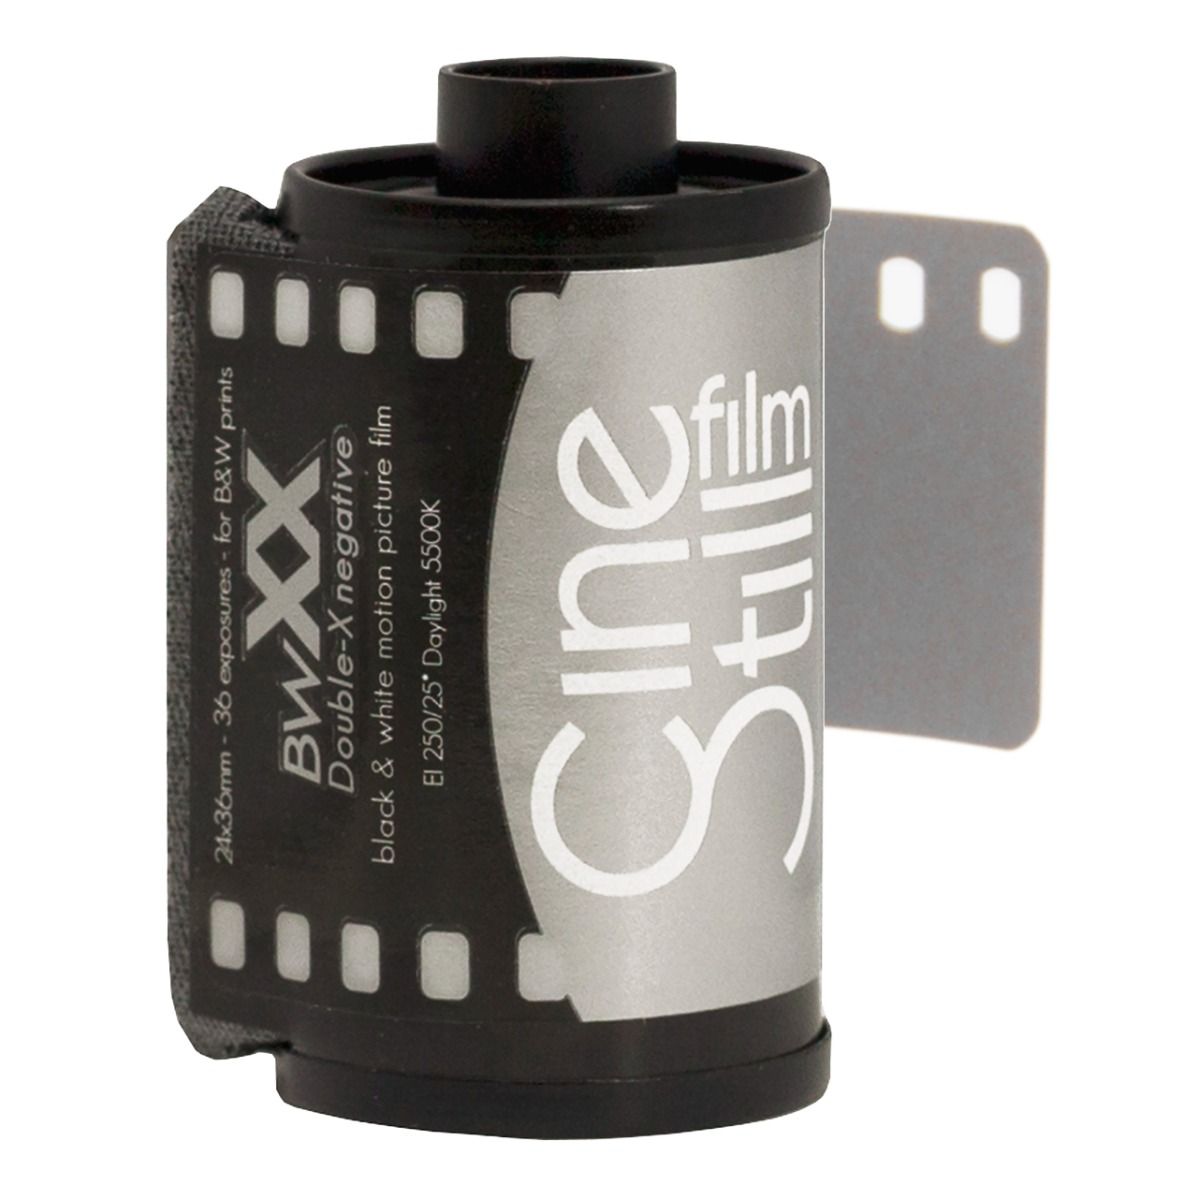 Cinestill BWxx black and white 135/36 exposure film